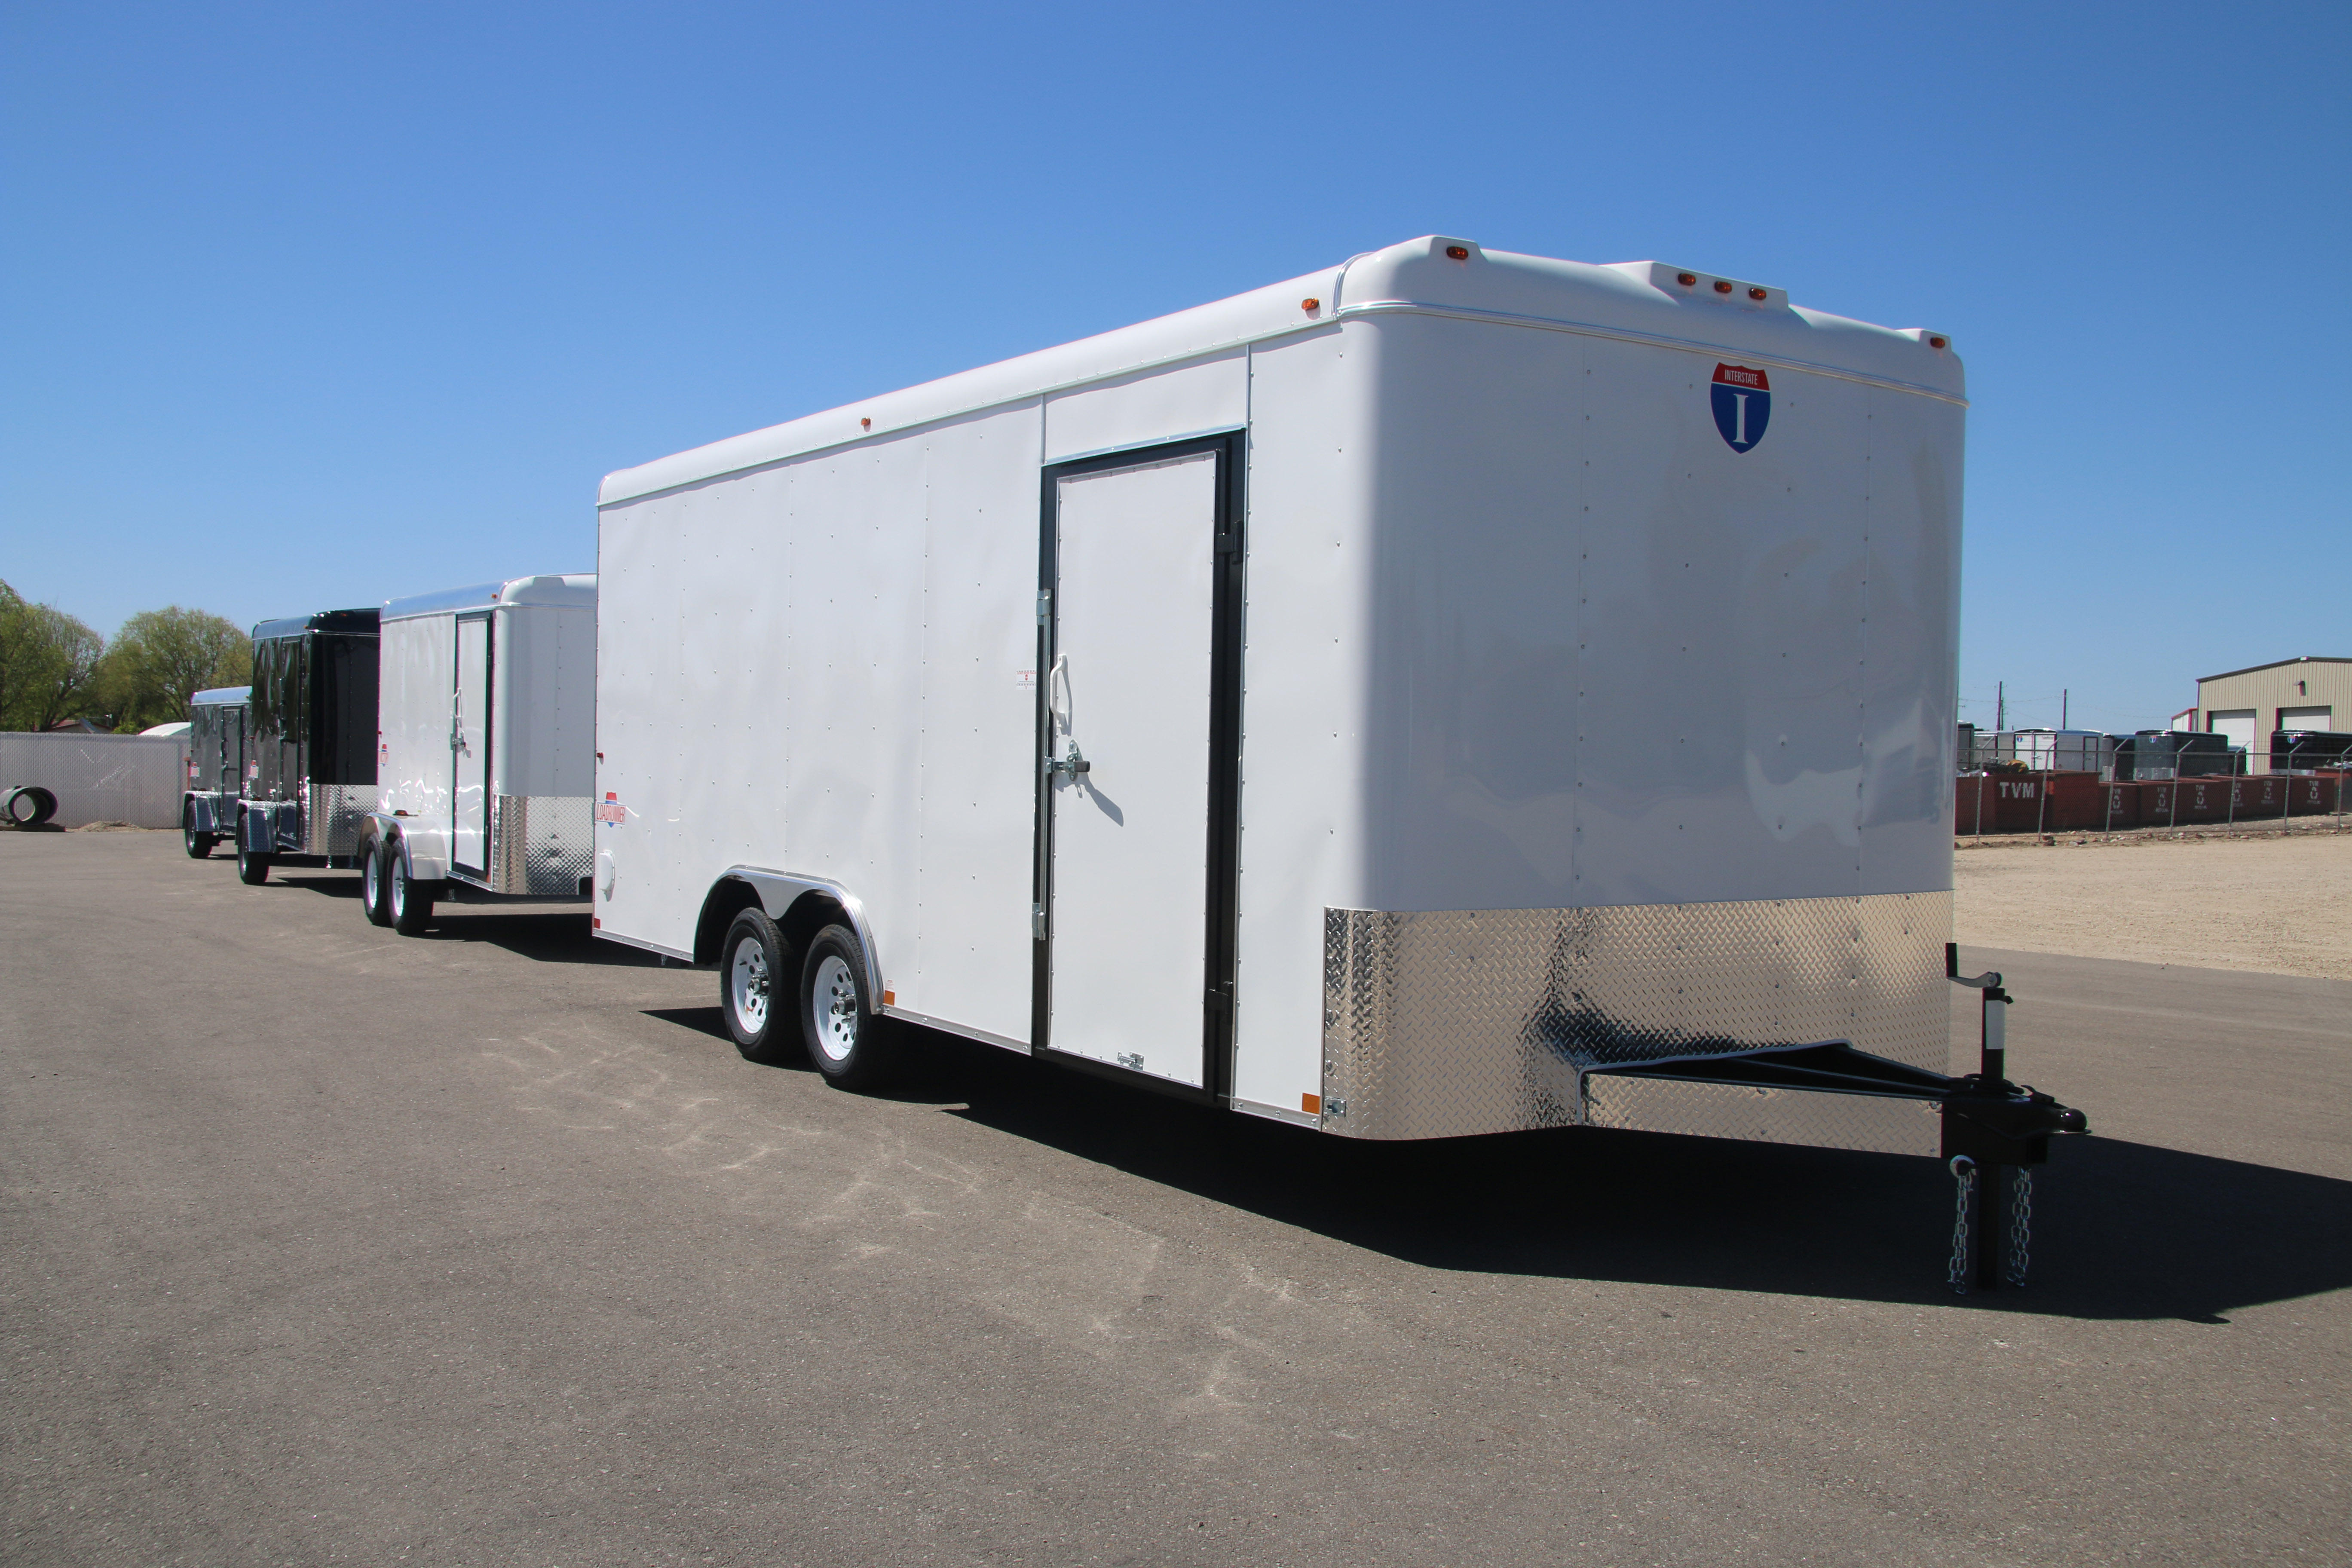 White 8.5' wide tandem cargo trailer TrailersPlus Fresno (559)473-1360